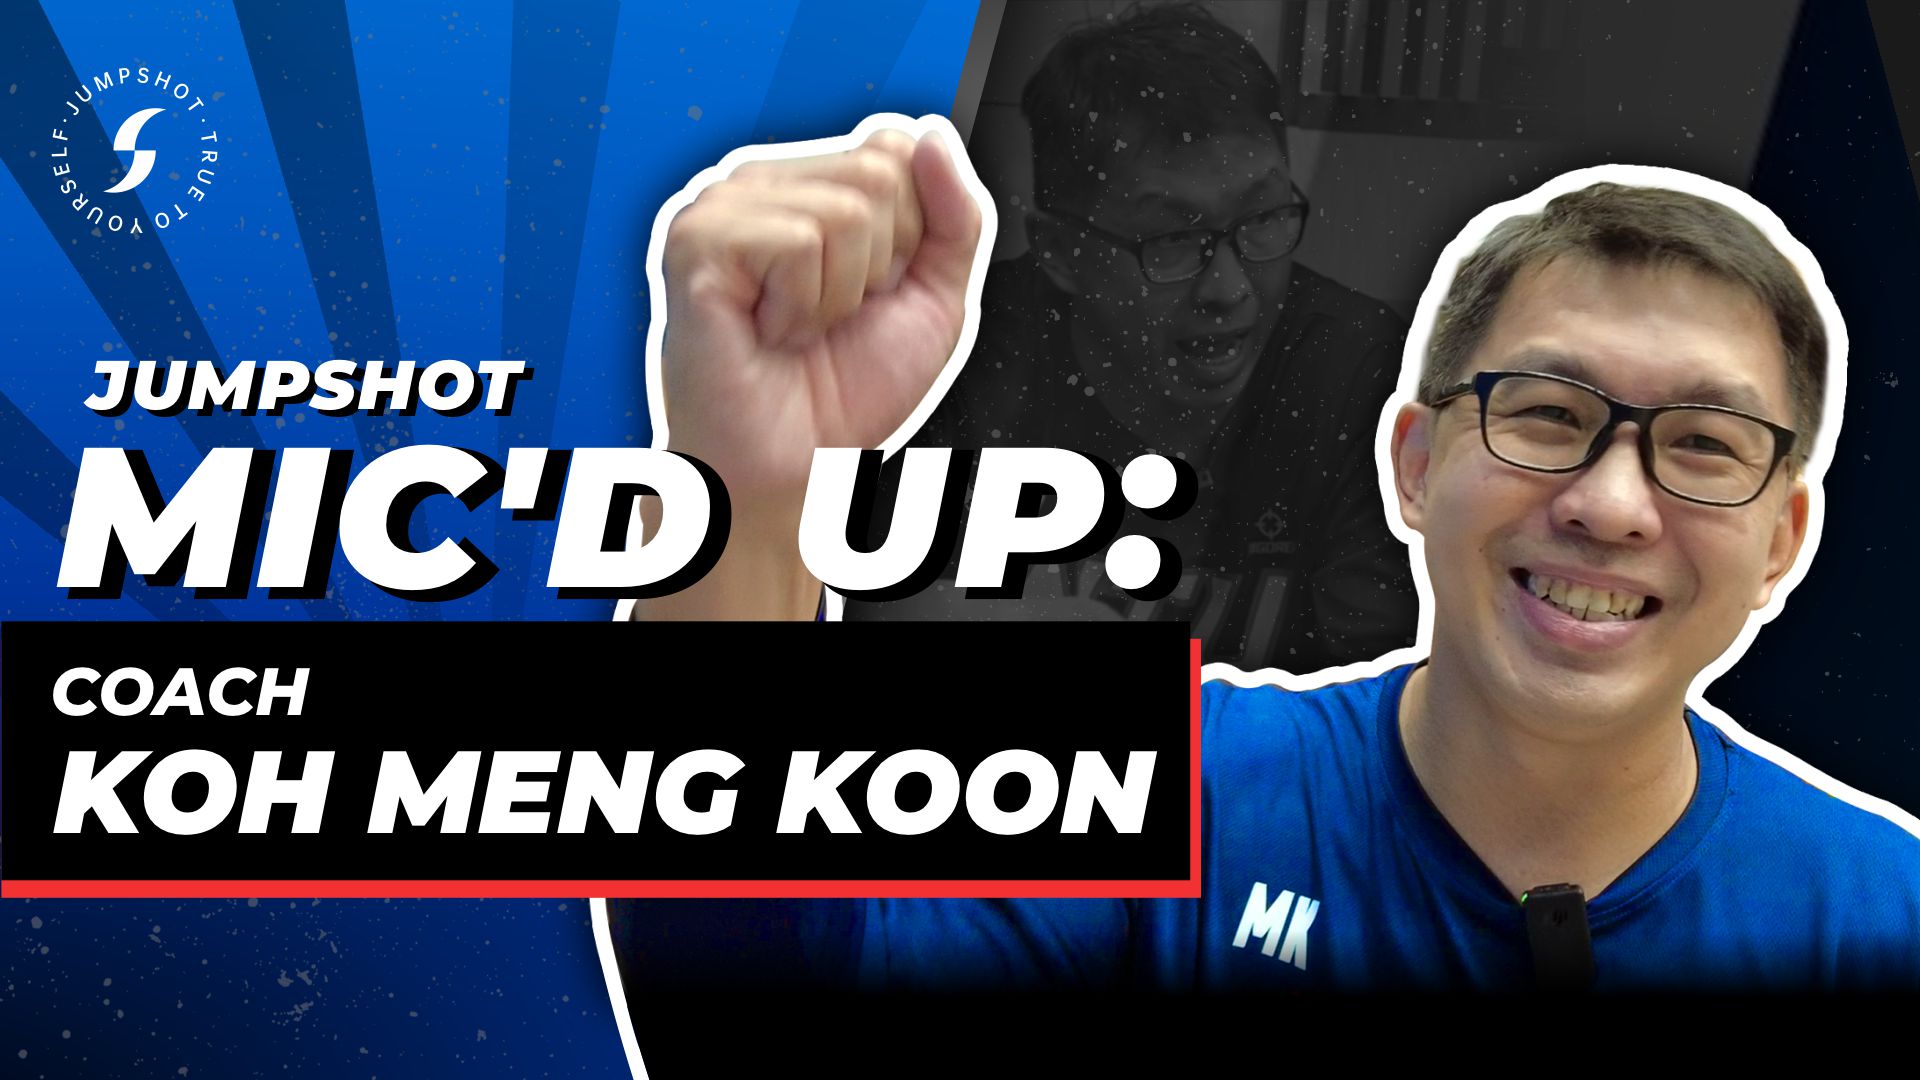 [WATCH NOW] Jumpshot Mic’d Up: Coach Koh Meng Koon